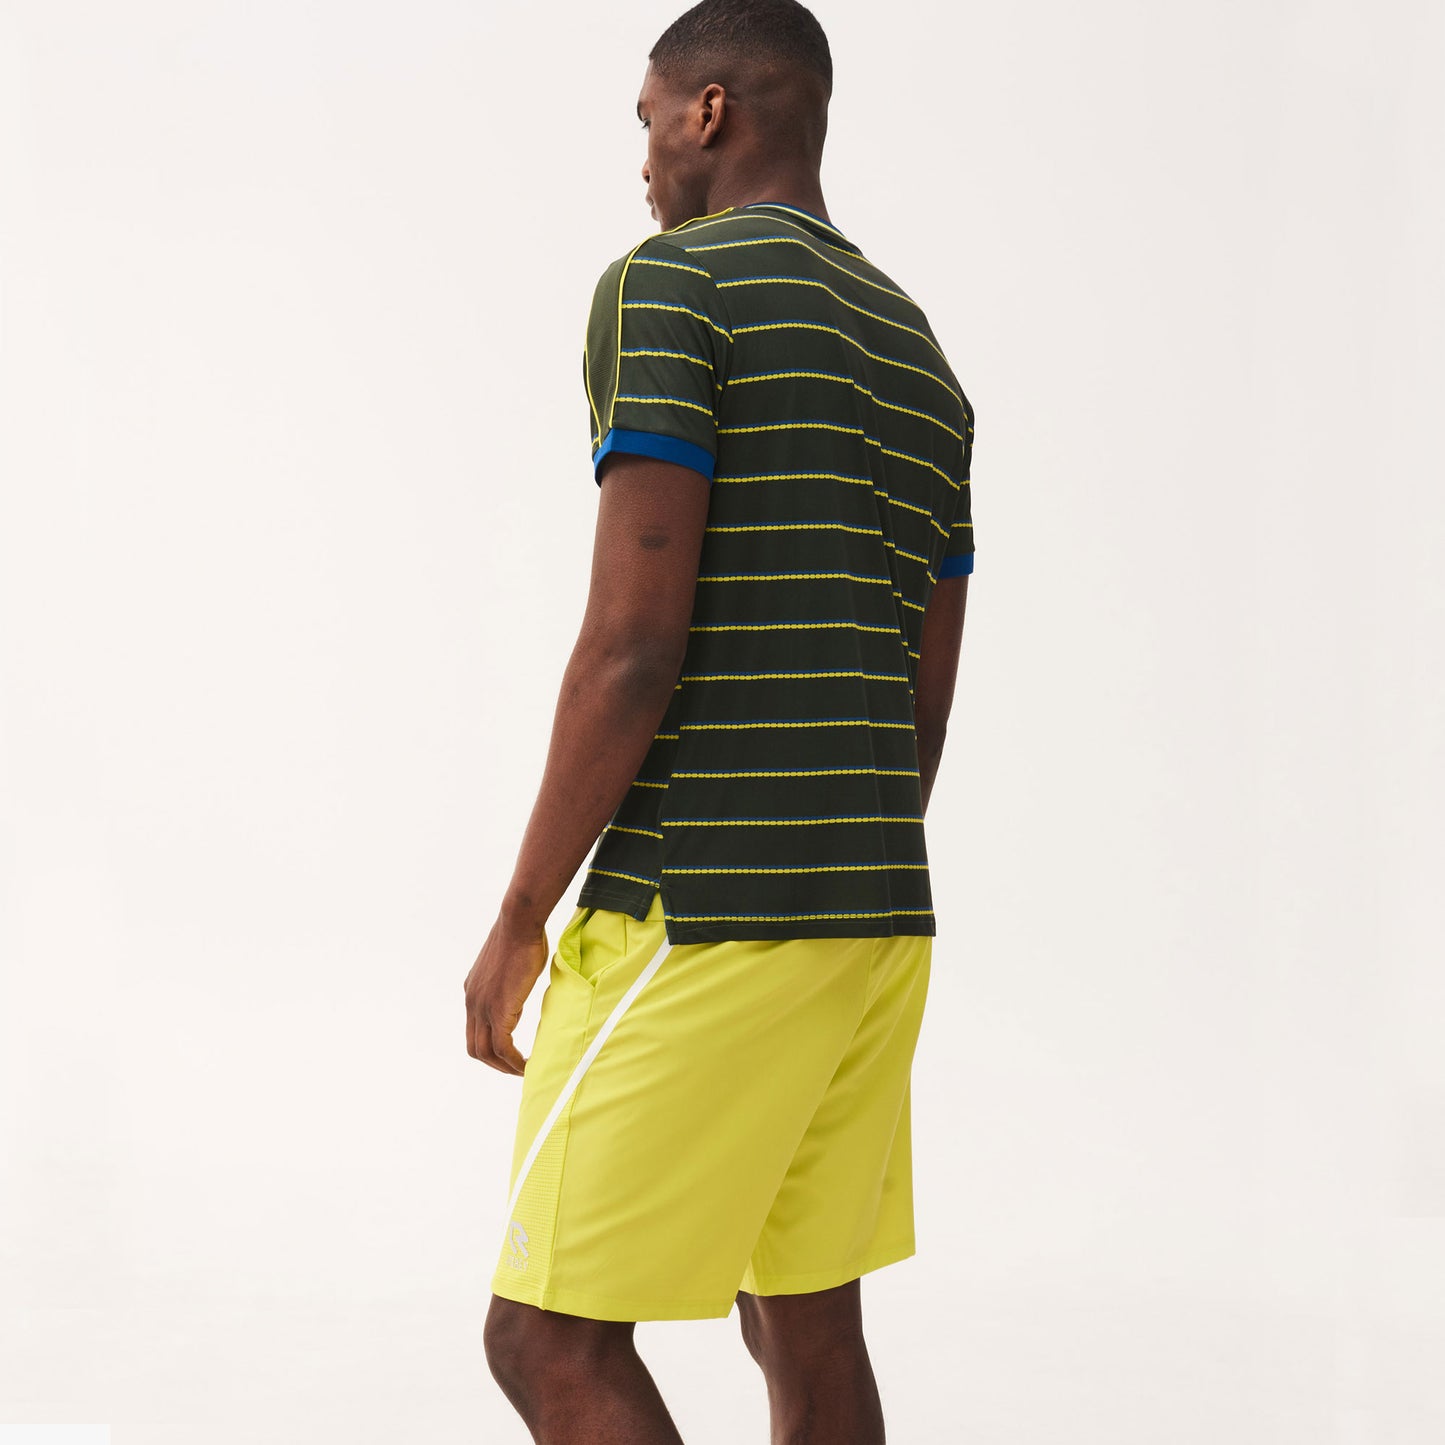 Robey Grip Men's 9-Inch Tennis Shorts Green (4)